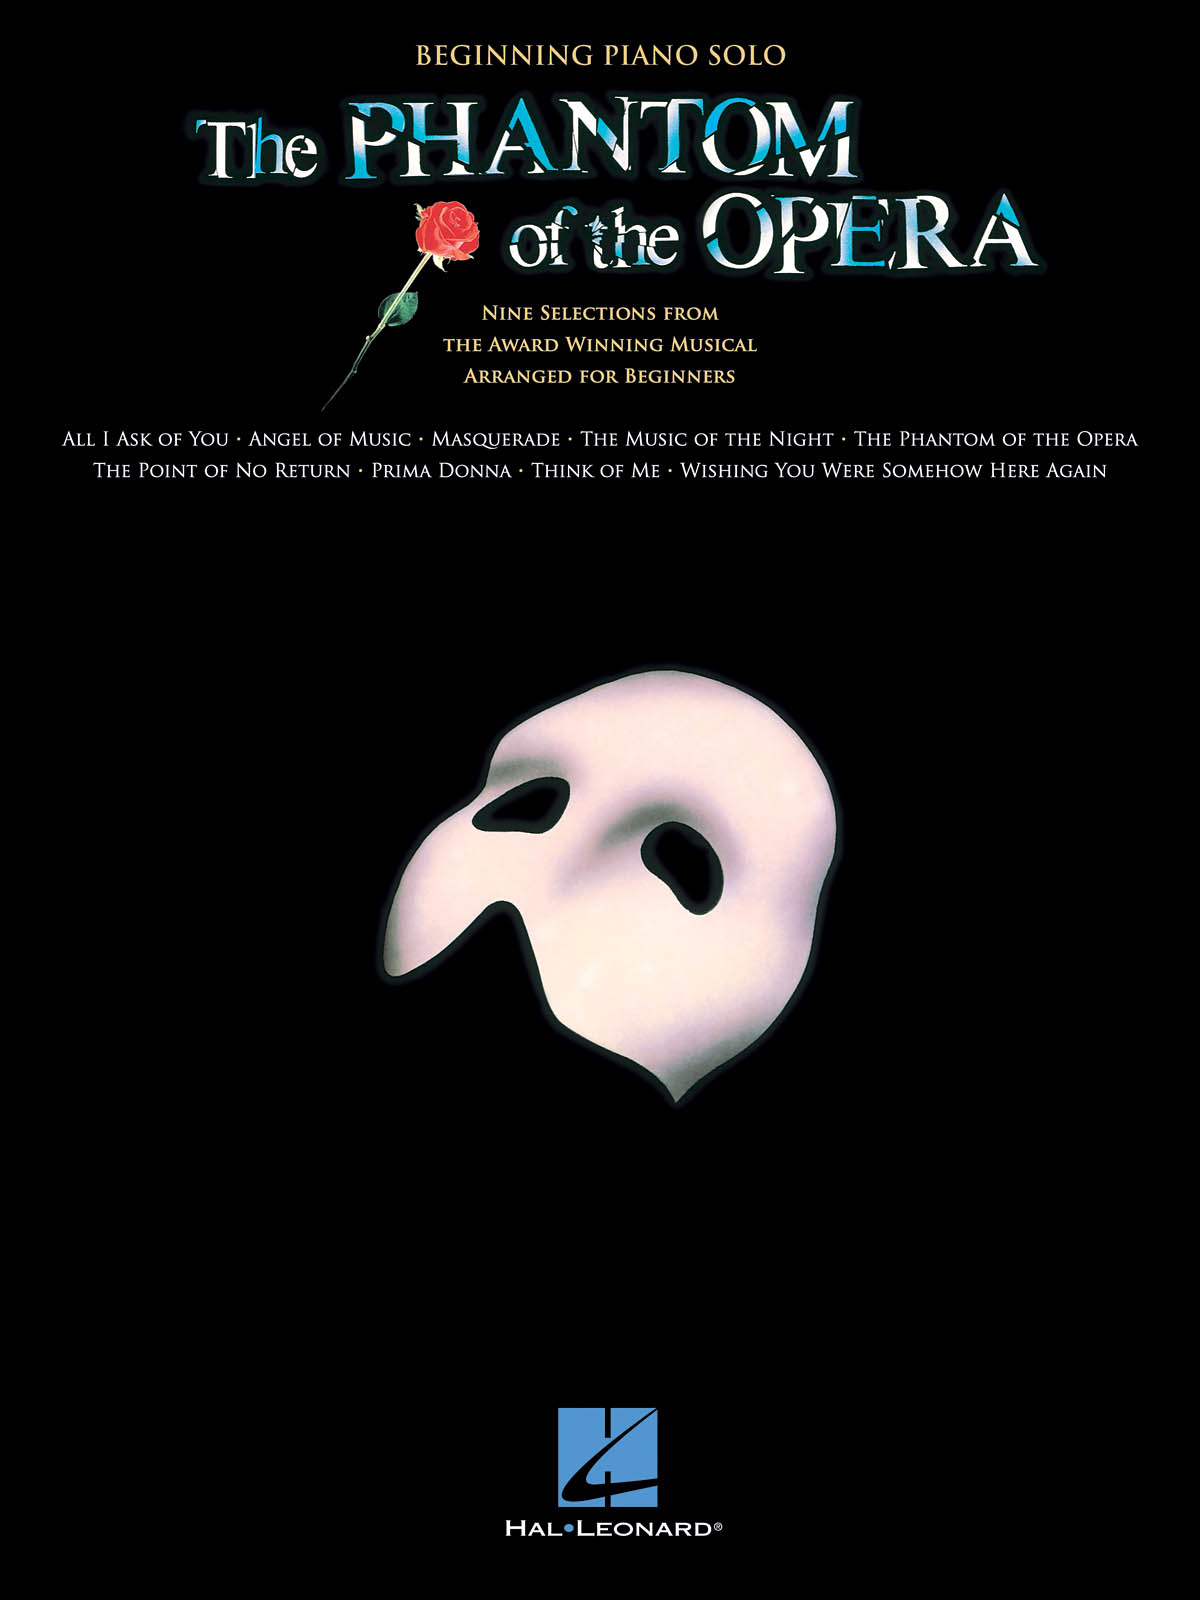 The Phantom Of The Opera - Beginning Piano Solo - Beginning Piano Solo Songbook - noty na klavír